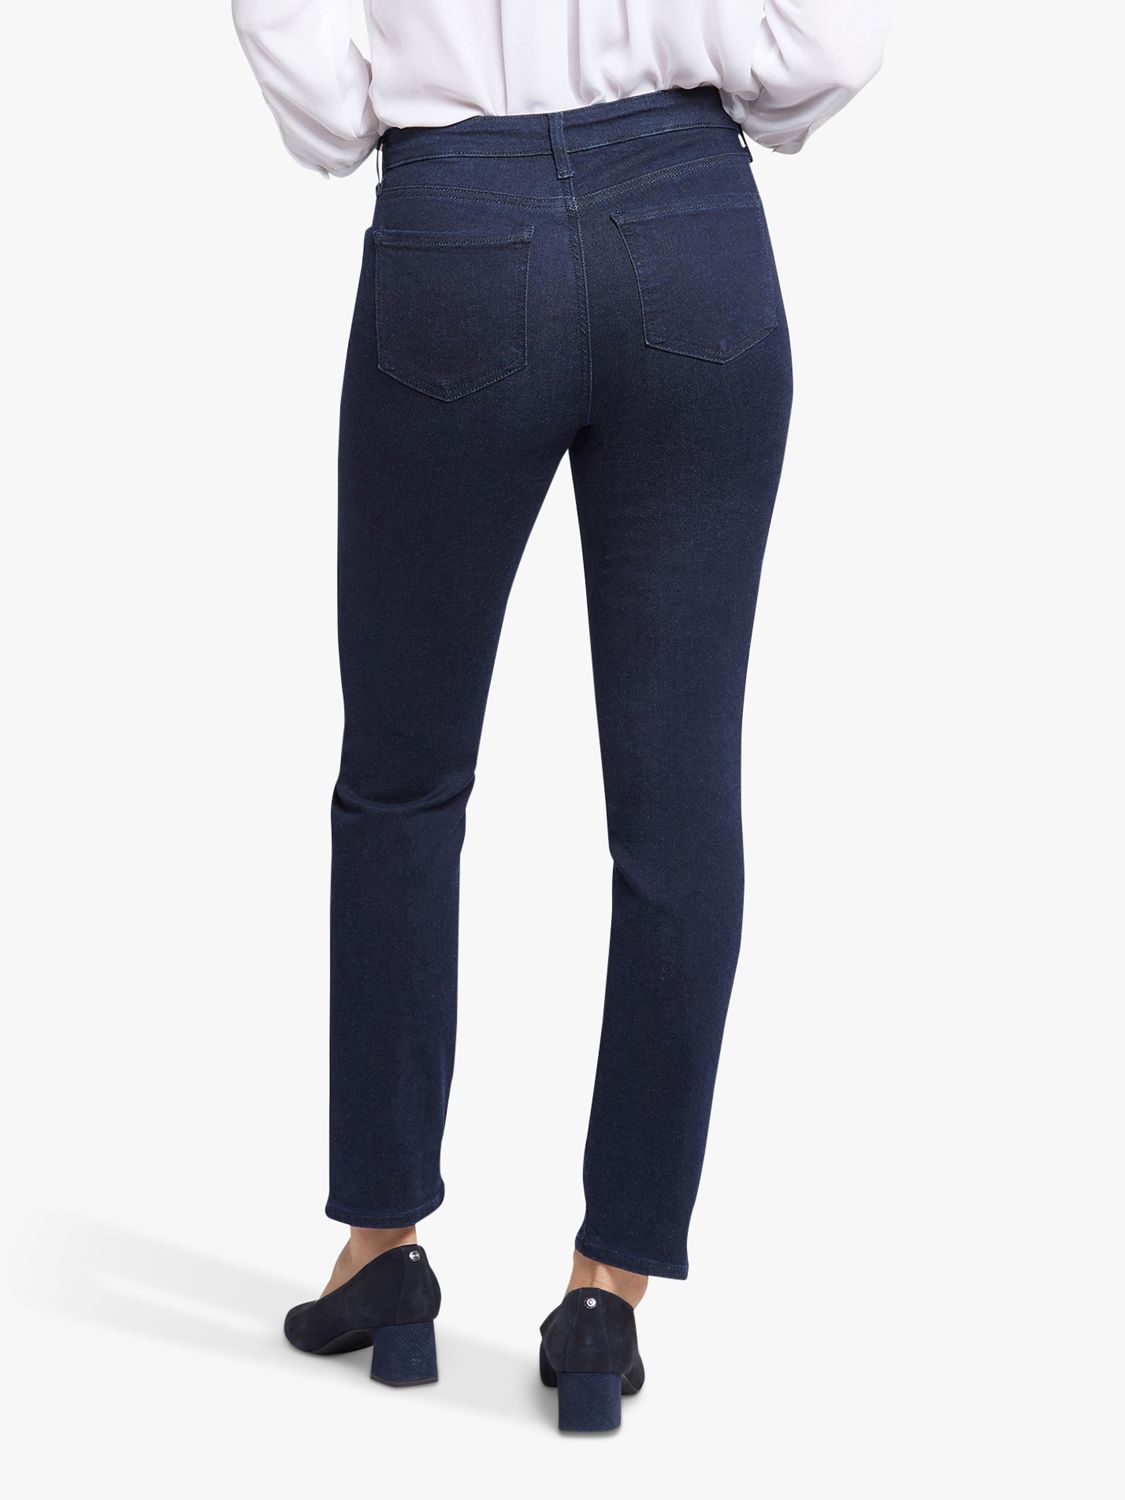 NYDJ Sheri Slim Leg Jeans, Rinse at John Lewis & Partners